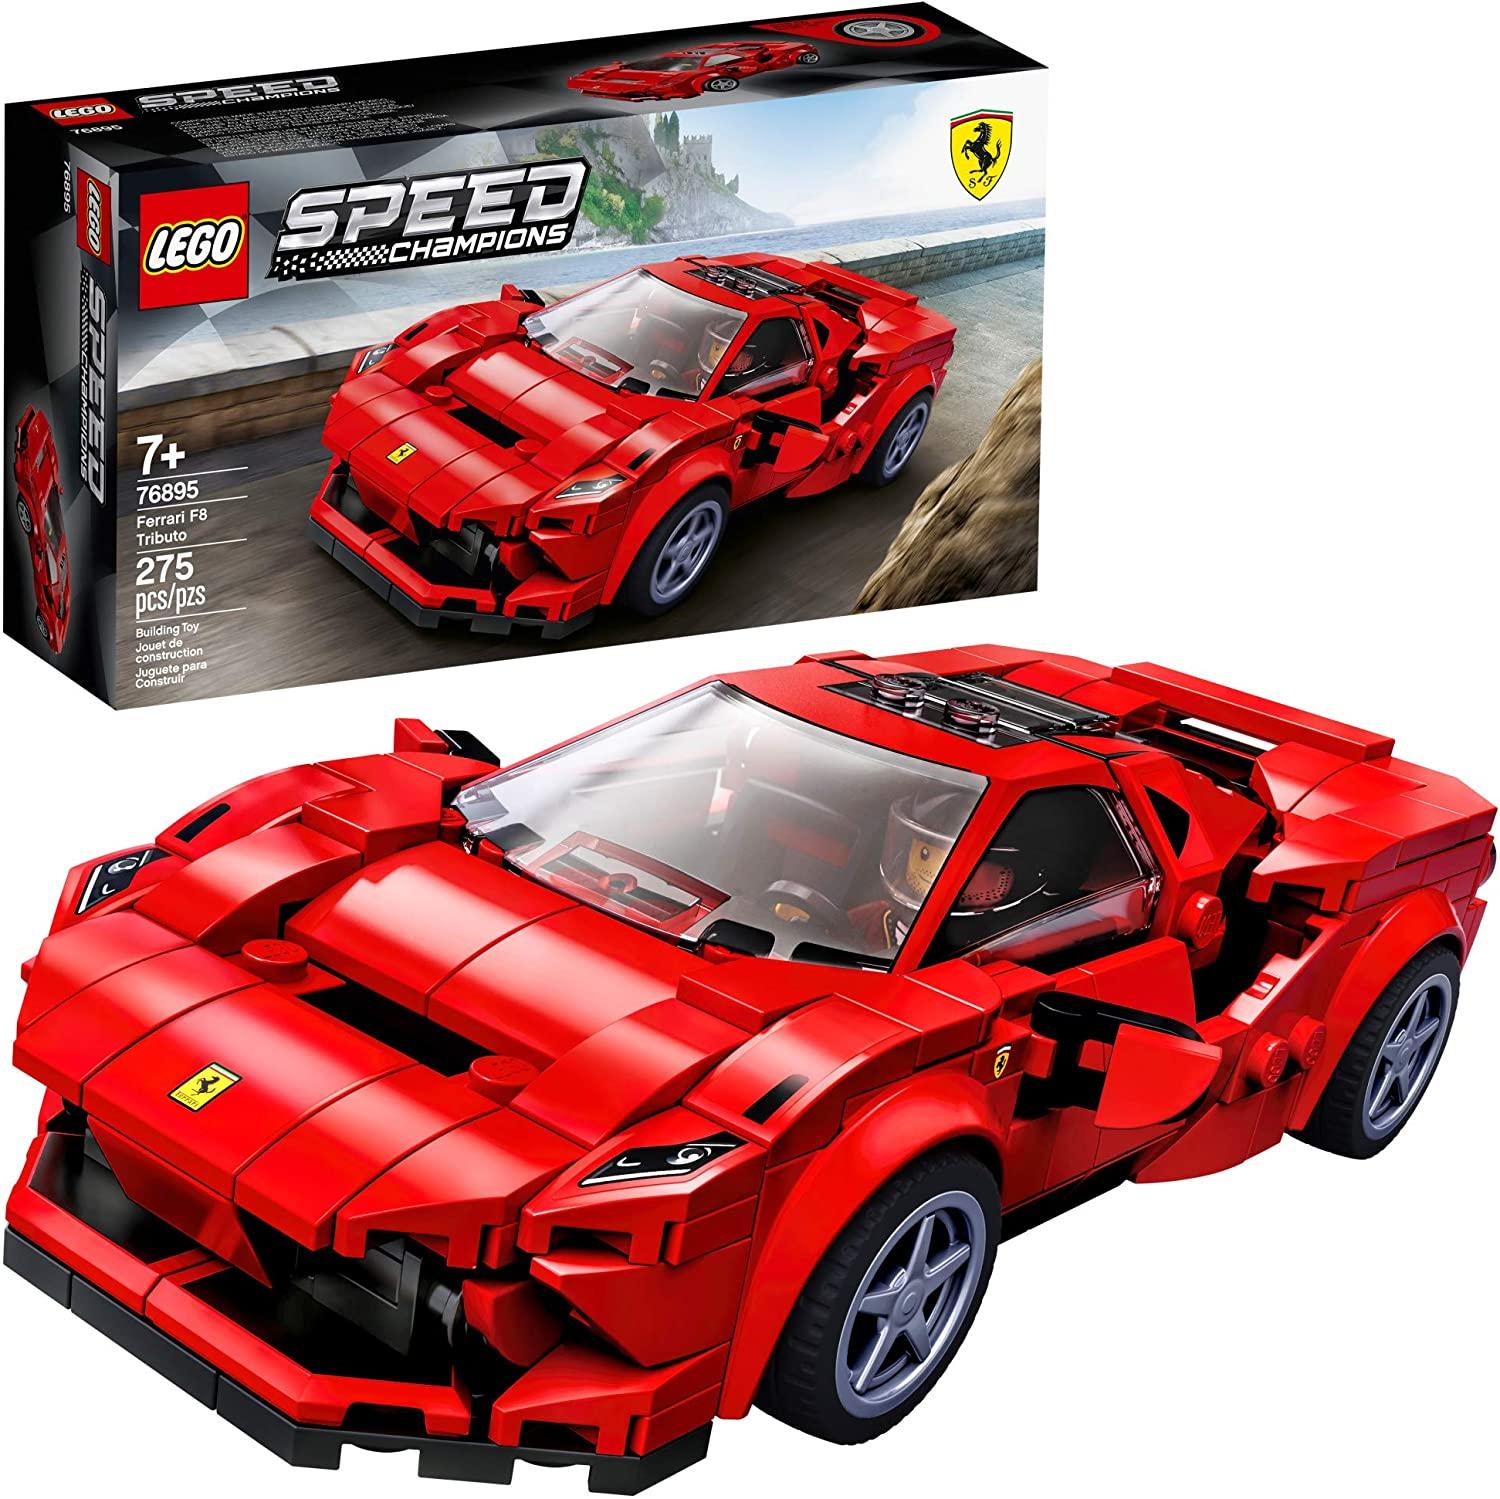 Lego Speed Champions Ferrari F8 Tributo Toy Car for $16